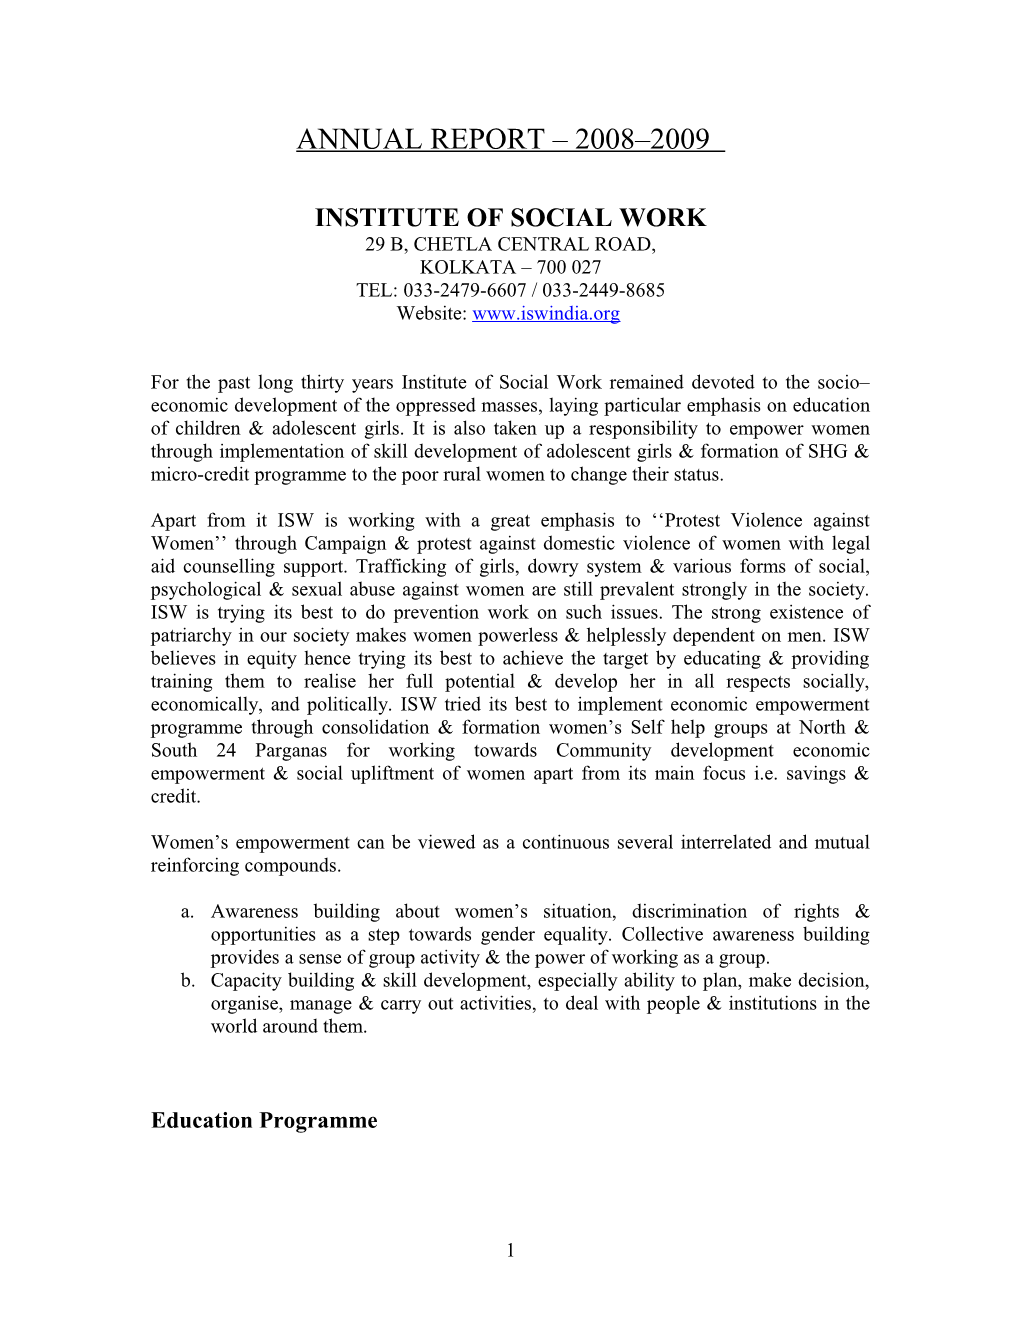 Institute of Social Work